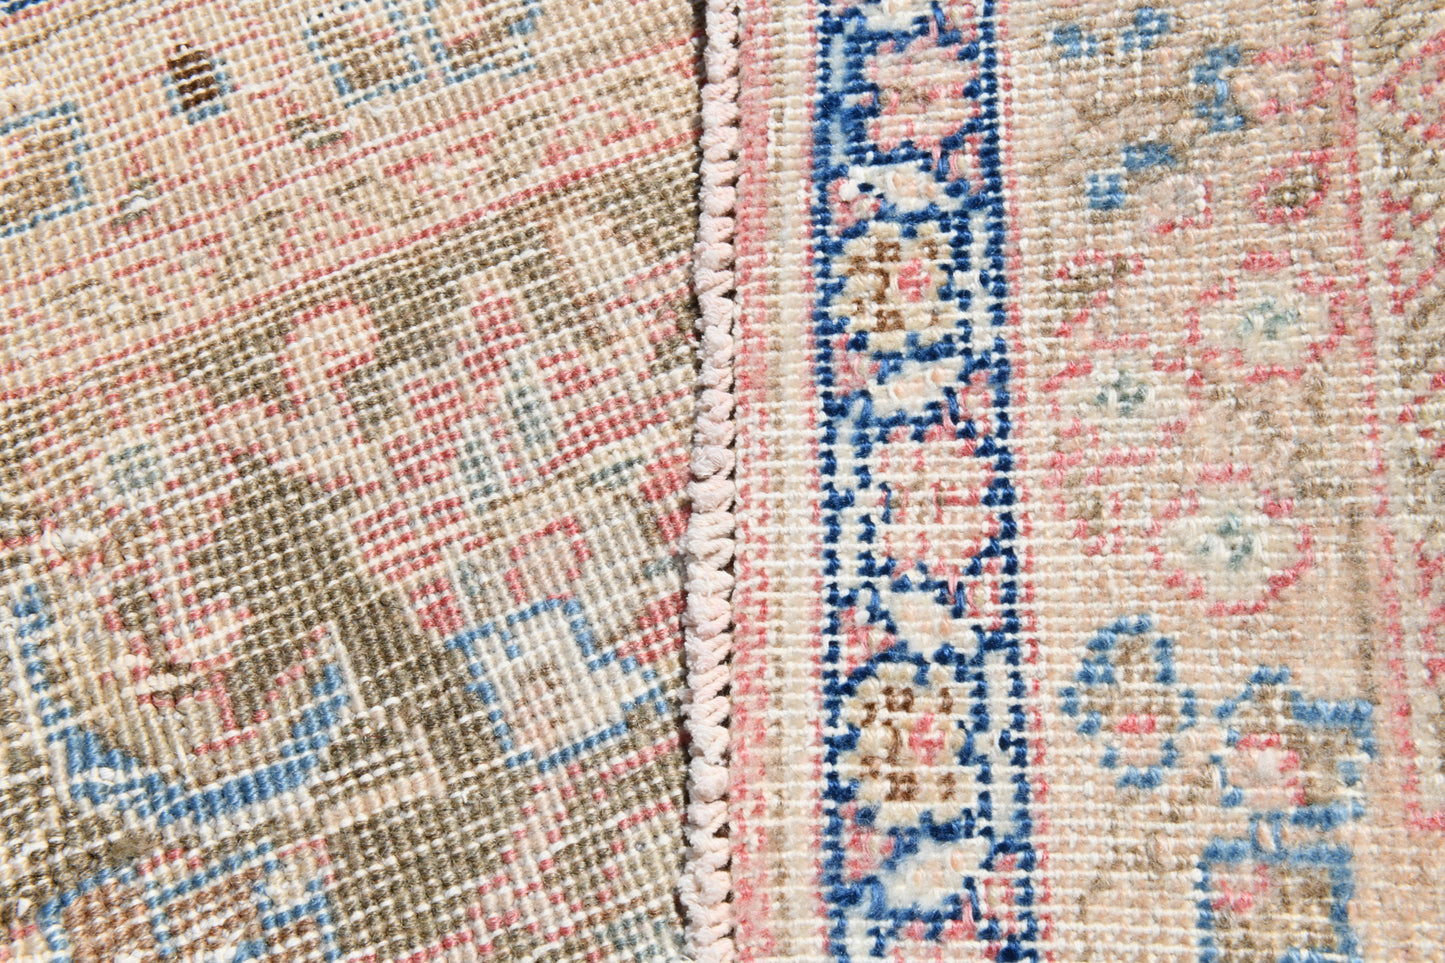 9'6" x 12'2" Vintage Persian Rug - 18884